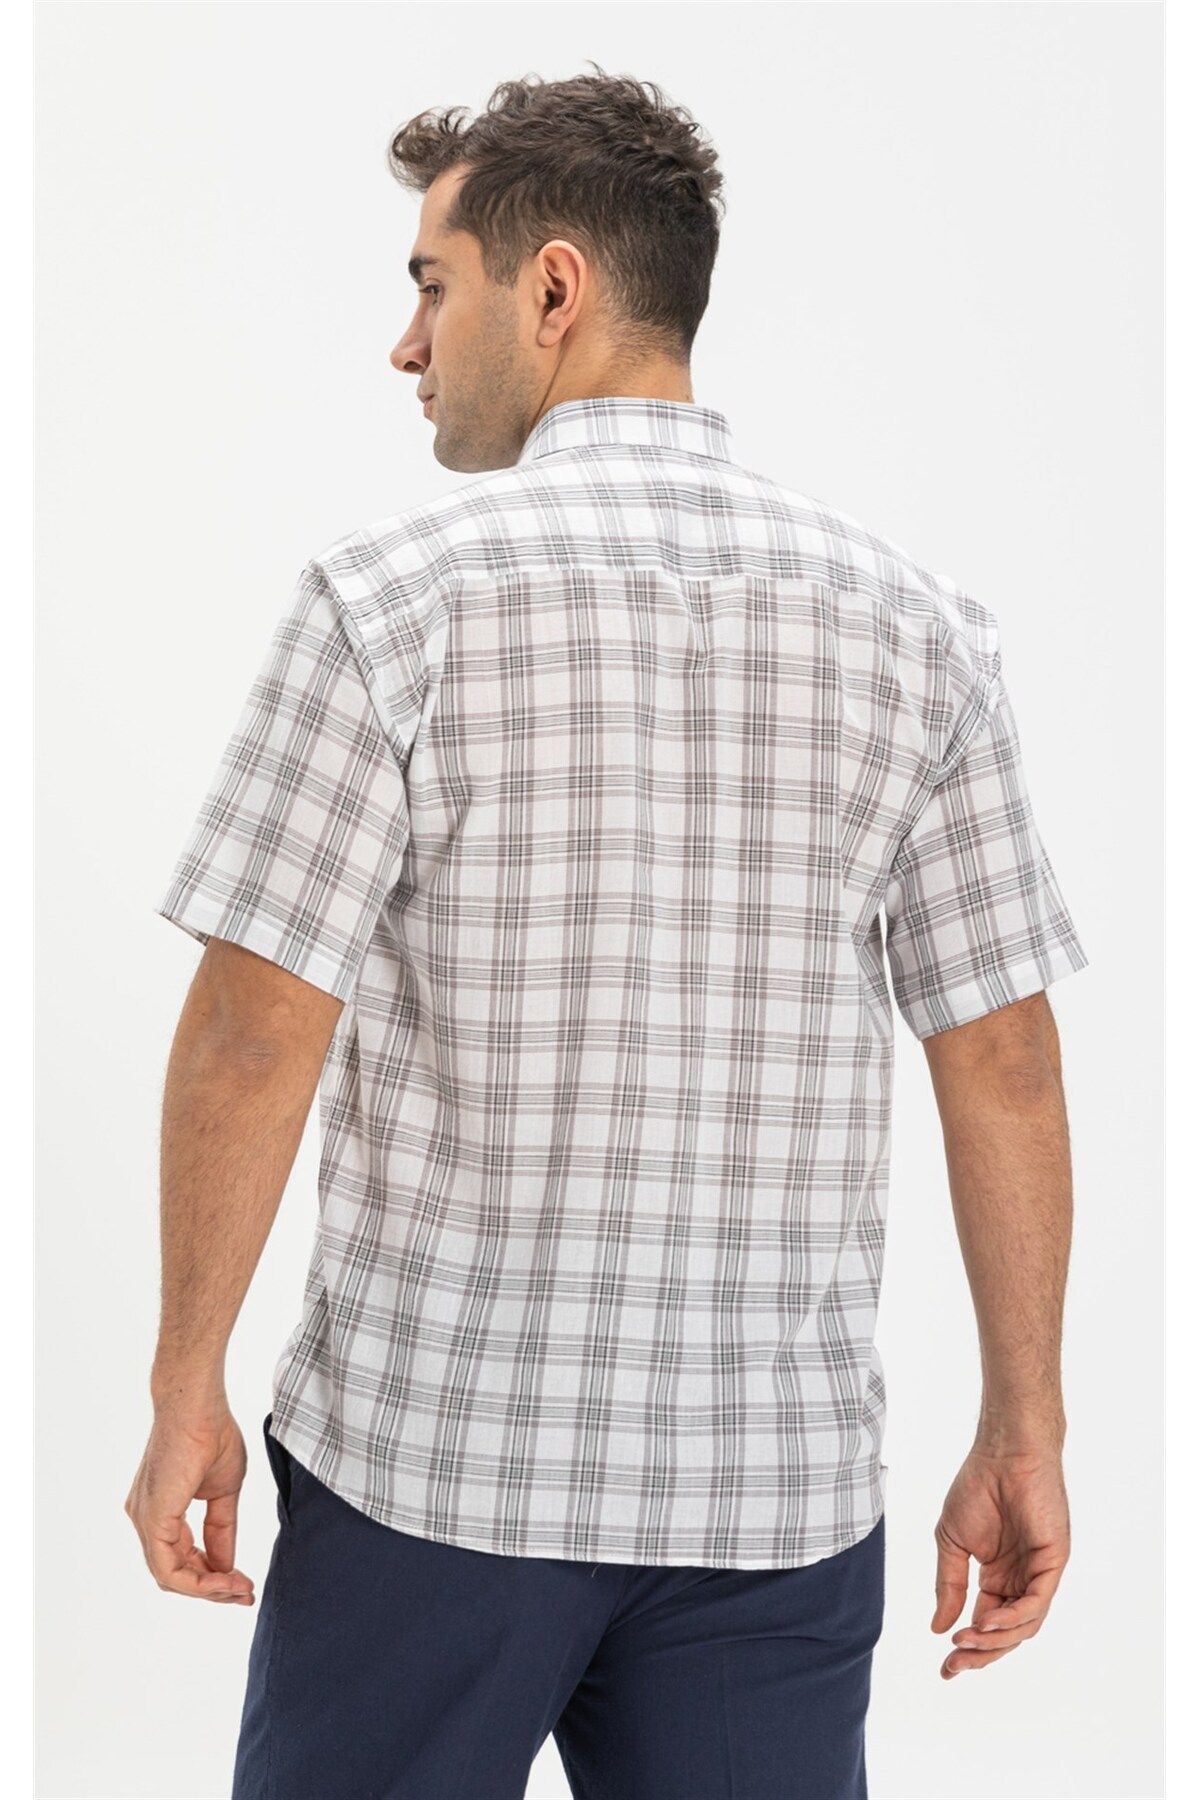 Eliş Şile Bezi پیراهن آستین کوتاه شیله پارچه ای تک جیب مردانه سایز بزرگ طوسی چهارخانه 3061